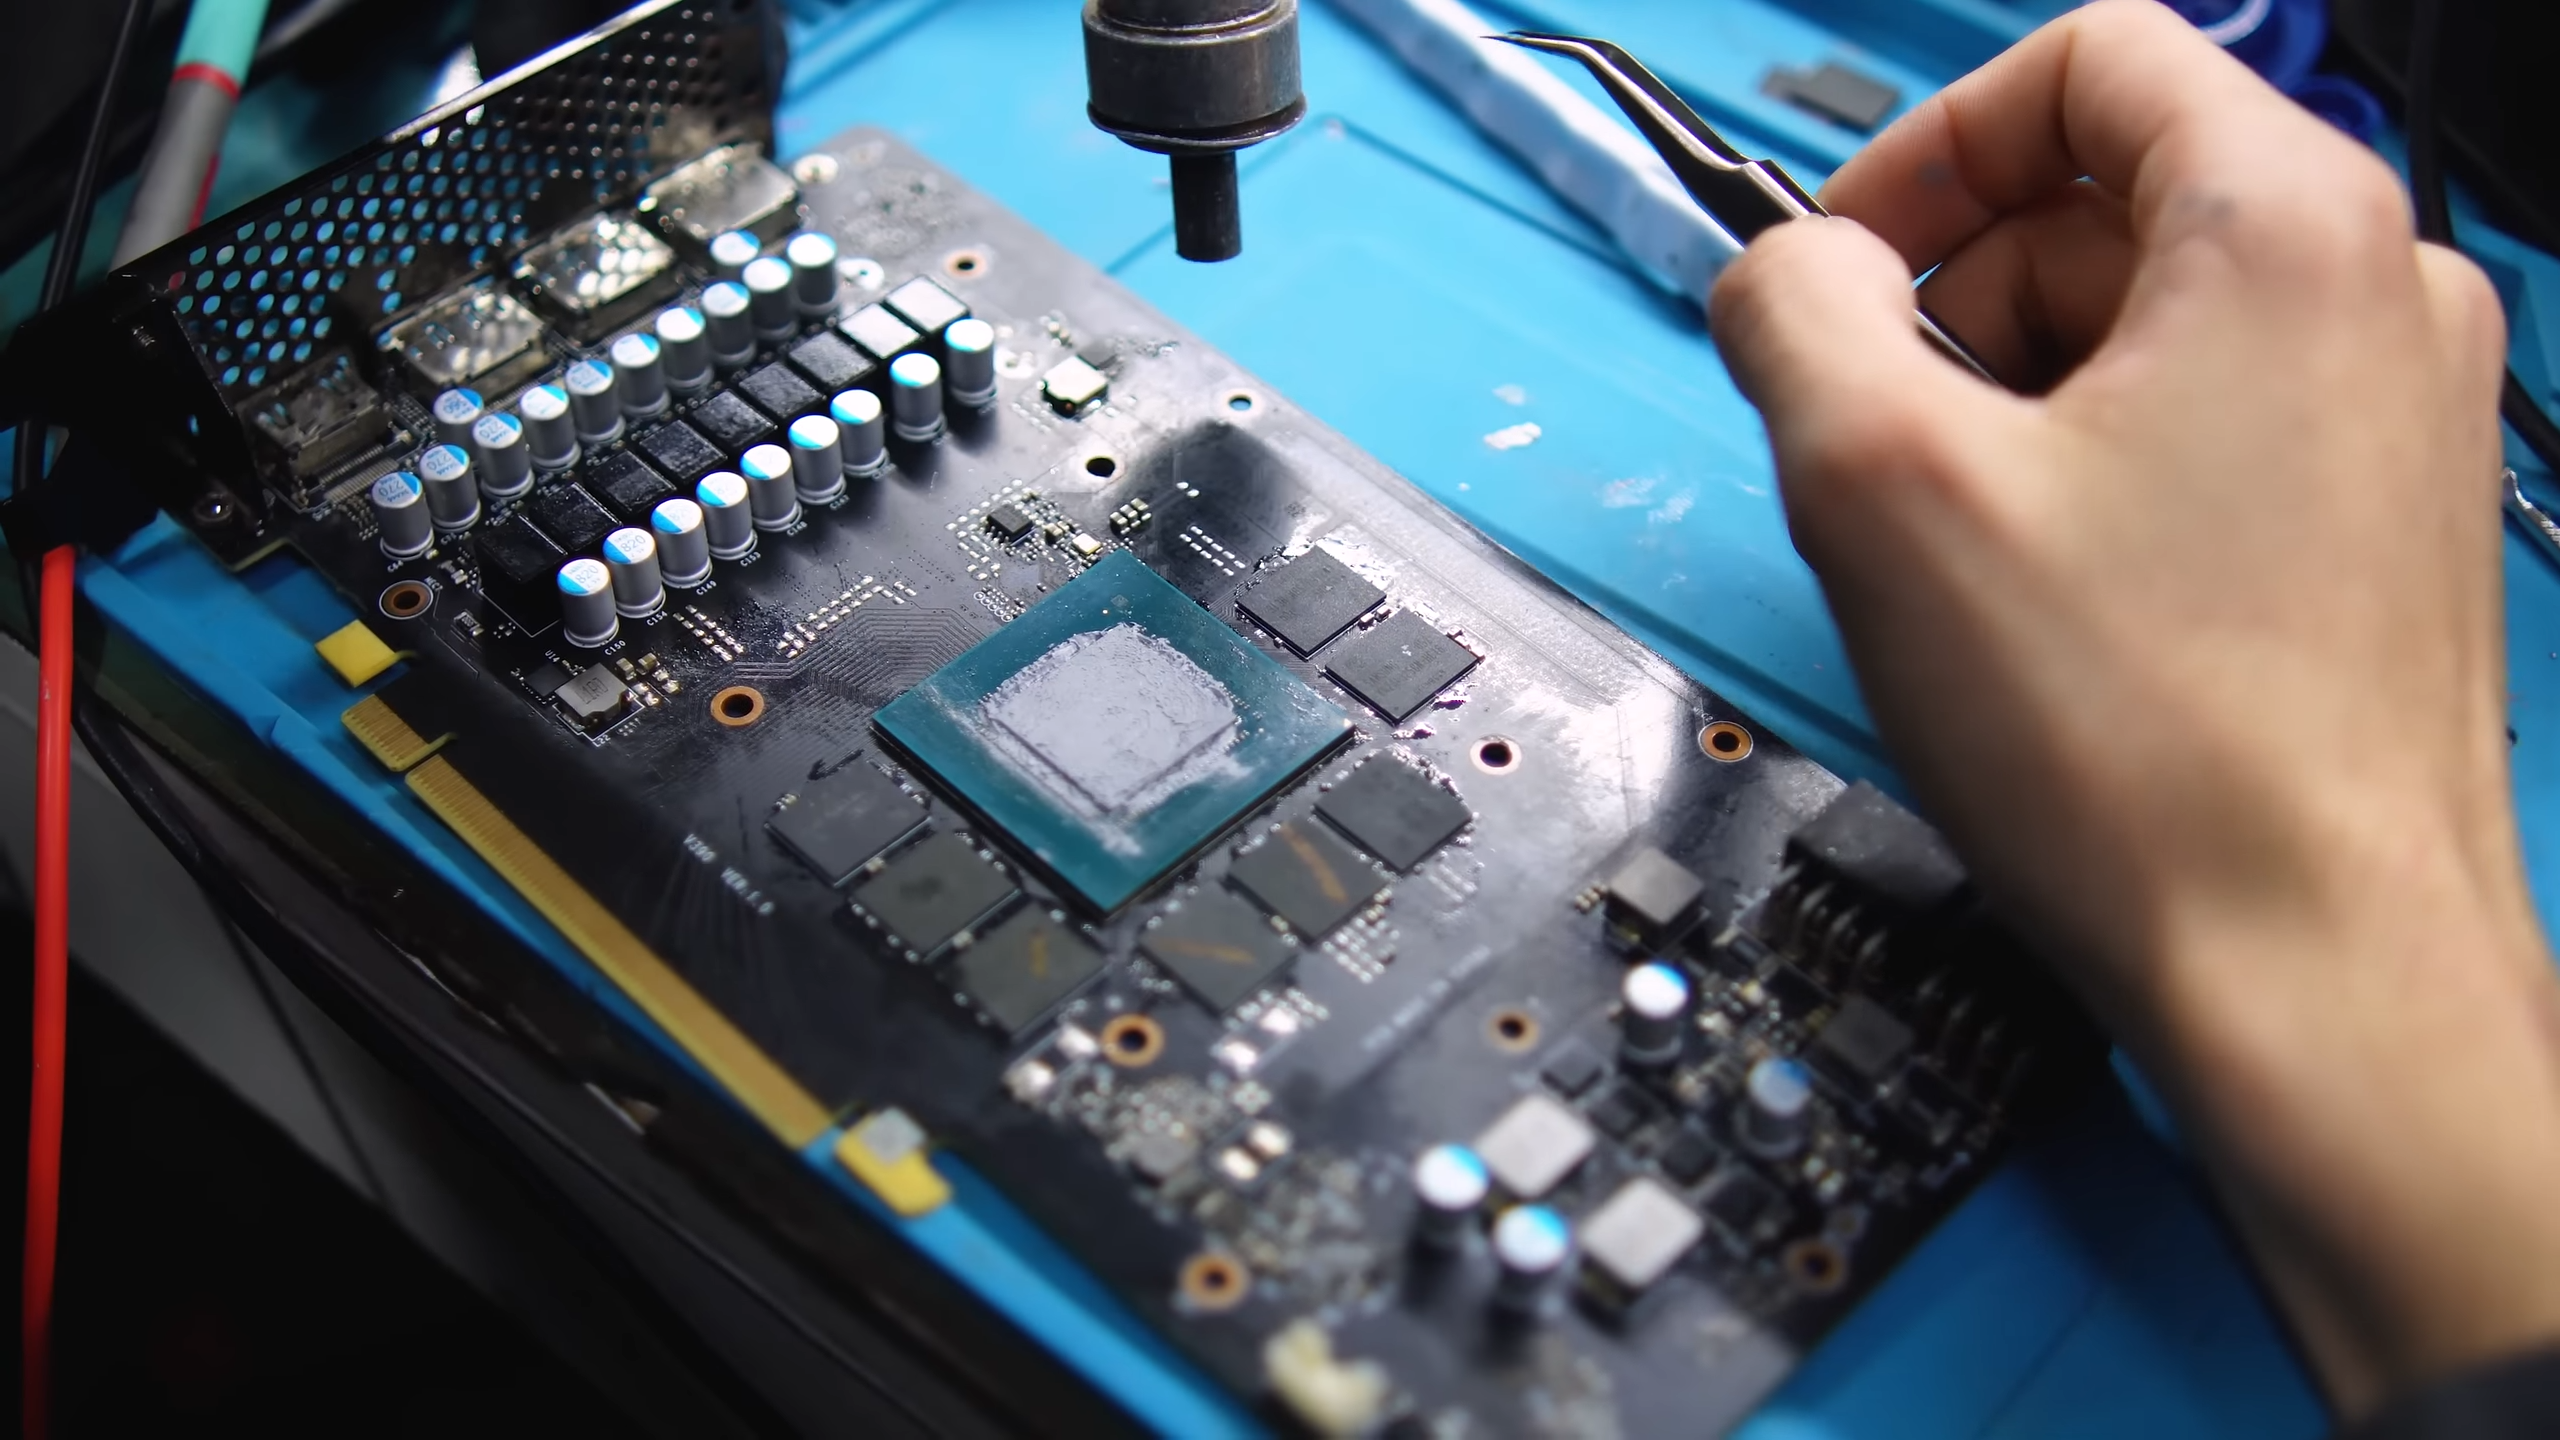 16GB RTX 3070 Mod Shows Impressive Performance Gains | Tom's Hardware